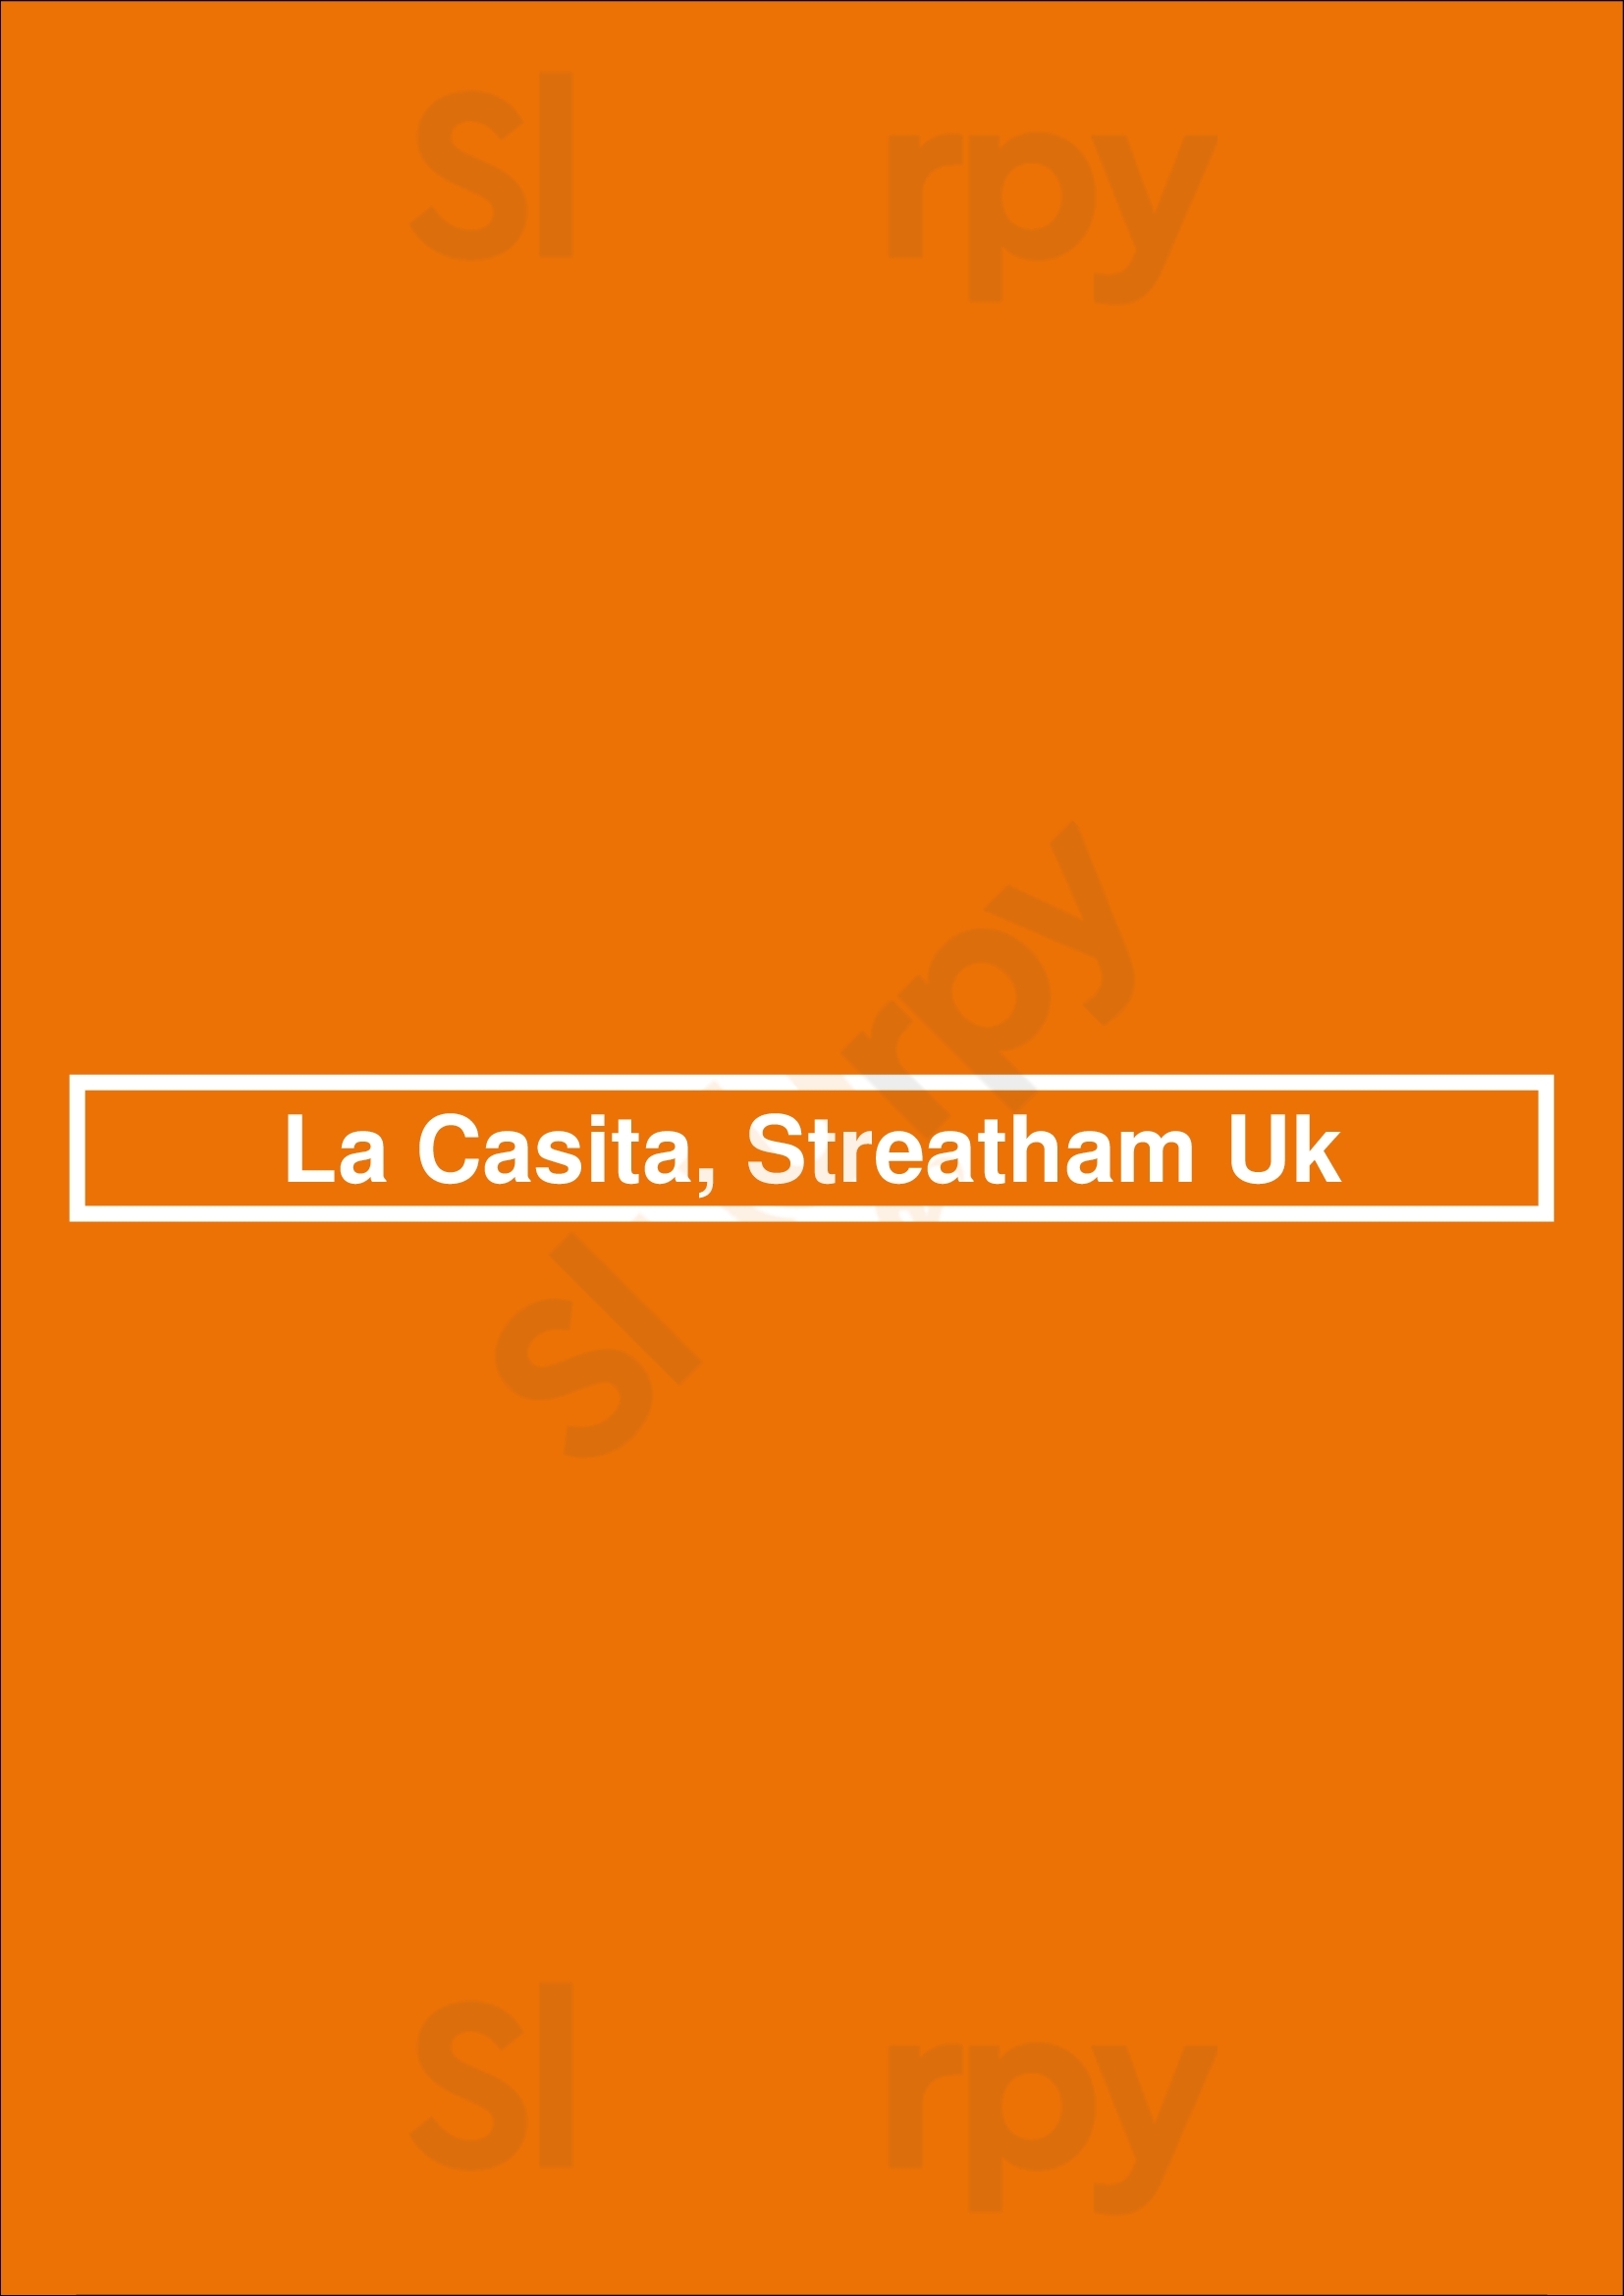 La Casita, Streatham Uk London Menu - 1